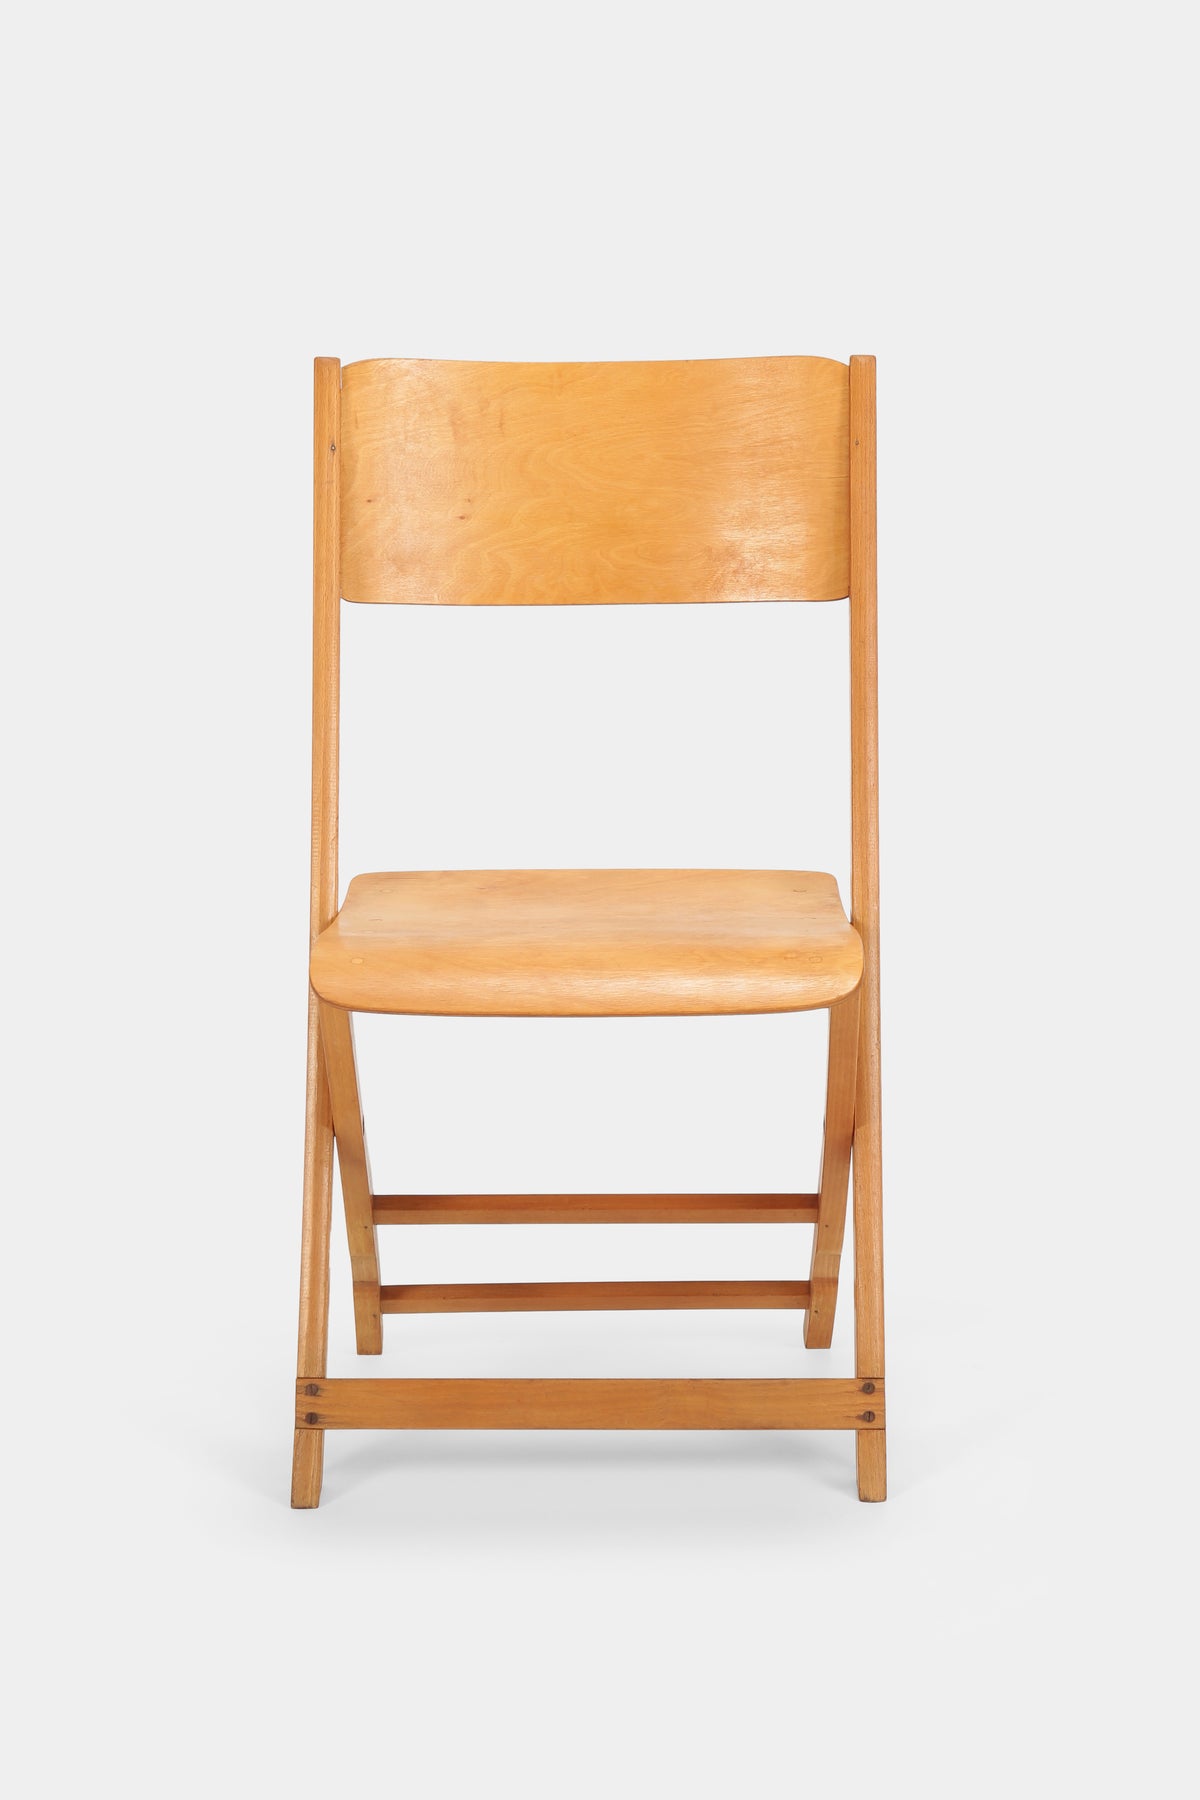 Swiss Birchwood Folding Chair, 30s